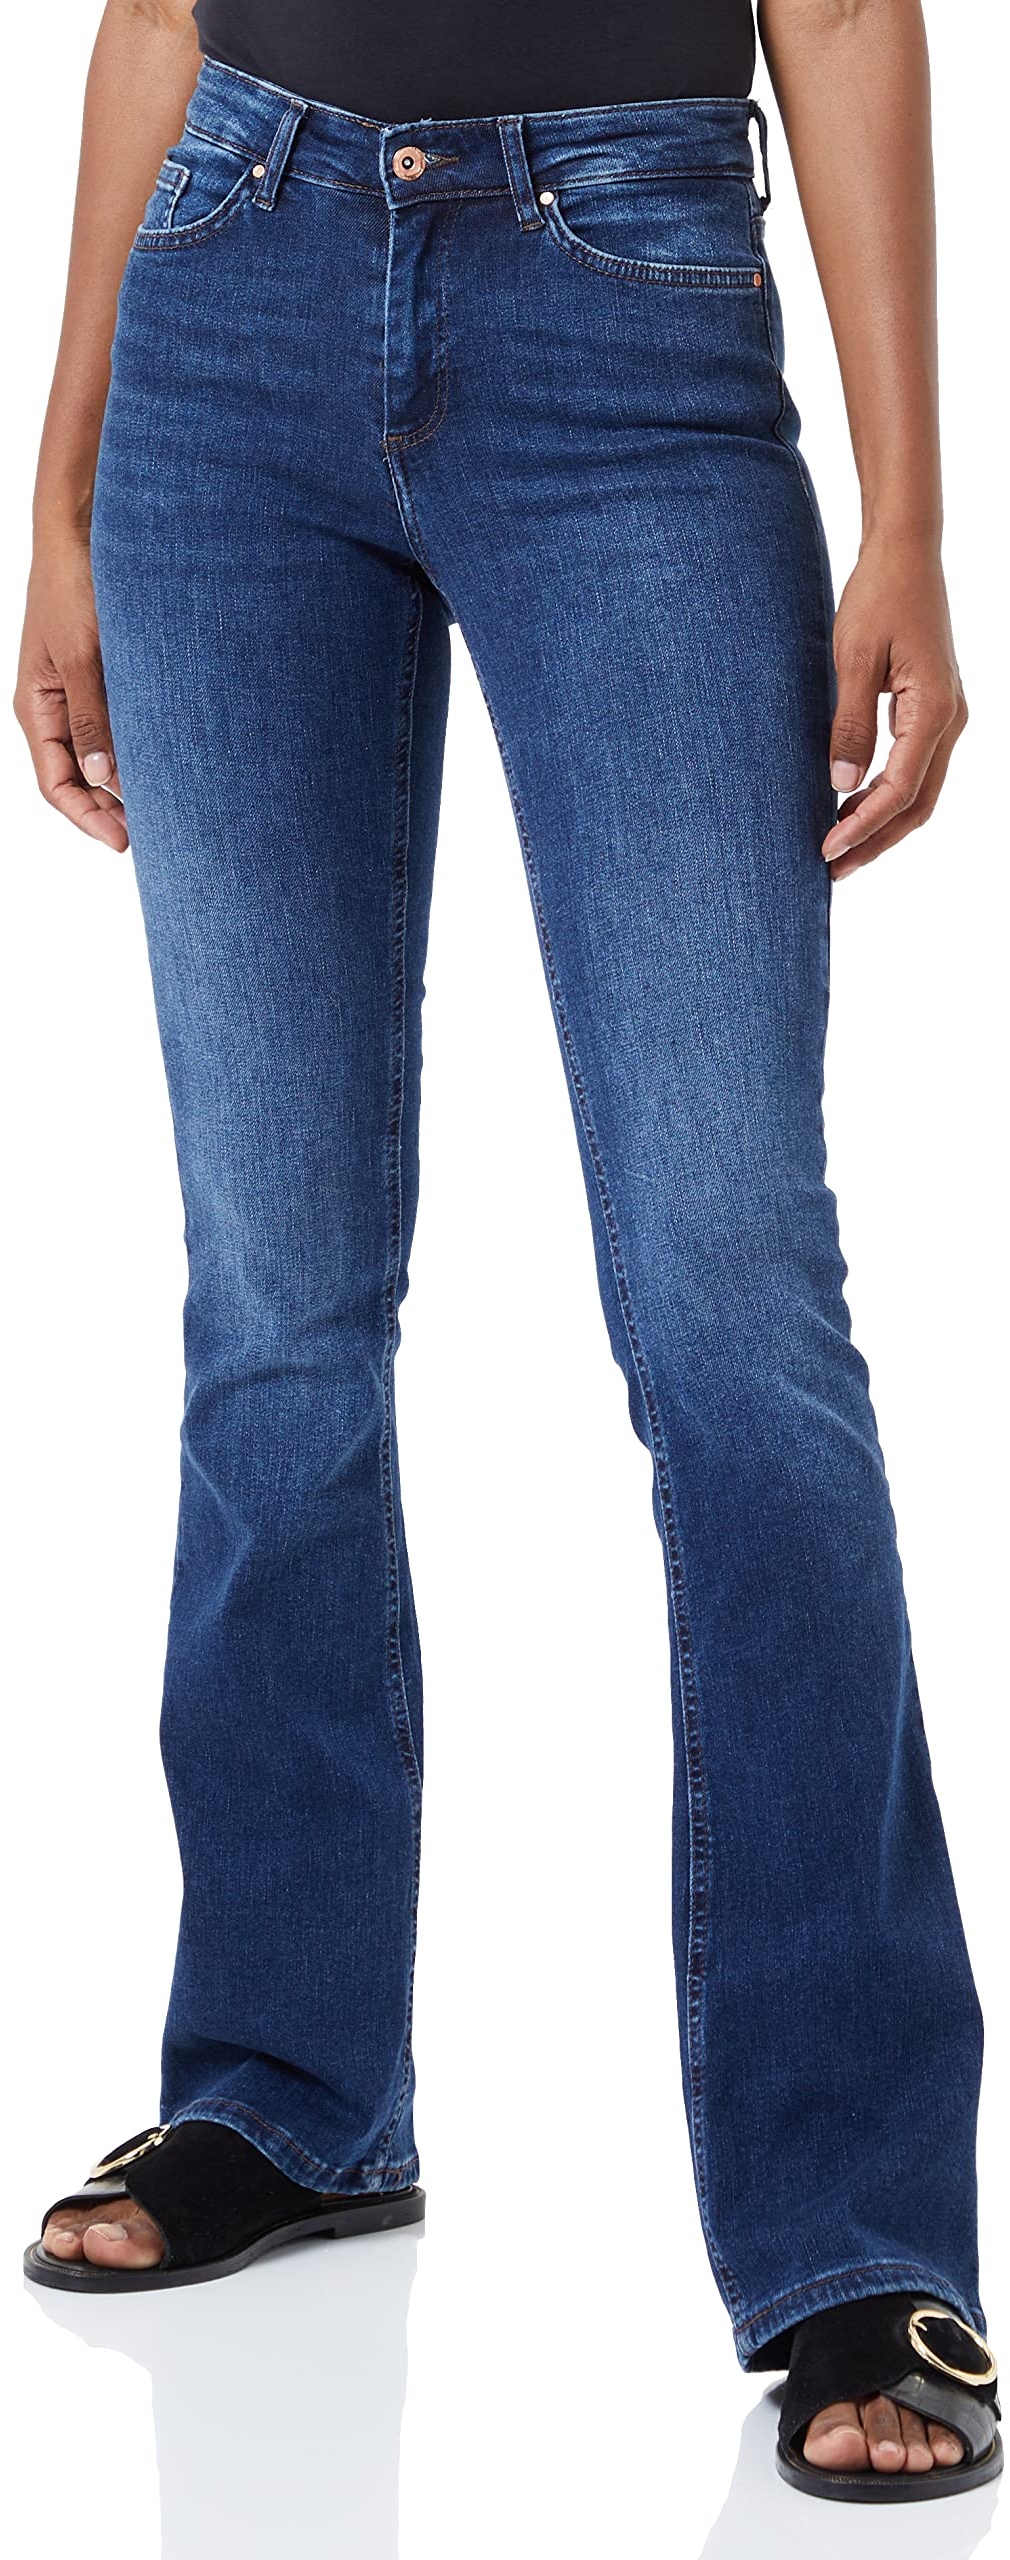 ONLY Damen Onlblush Mid Flared Dnm Tai021 Noos Jeans, Dark Blue Denim, M / 30L EU